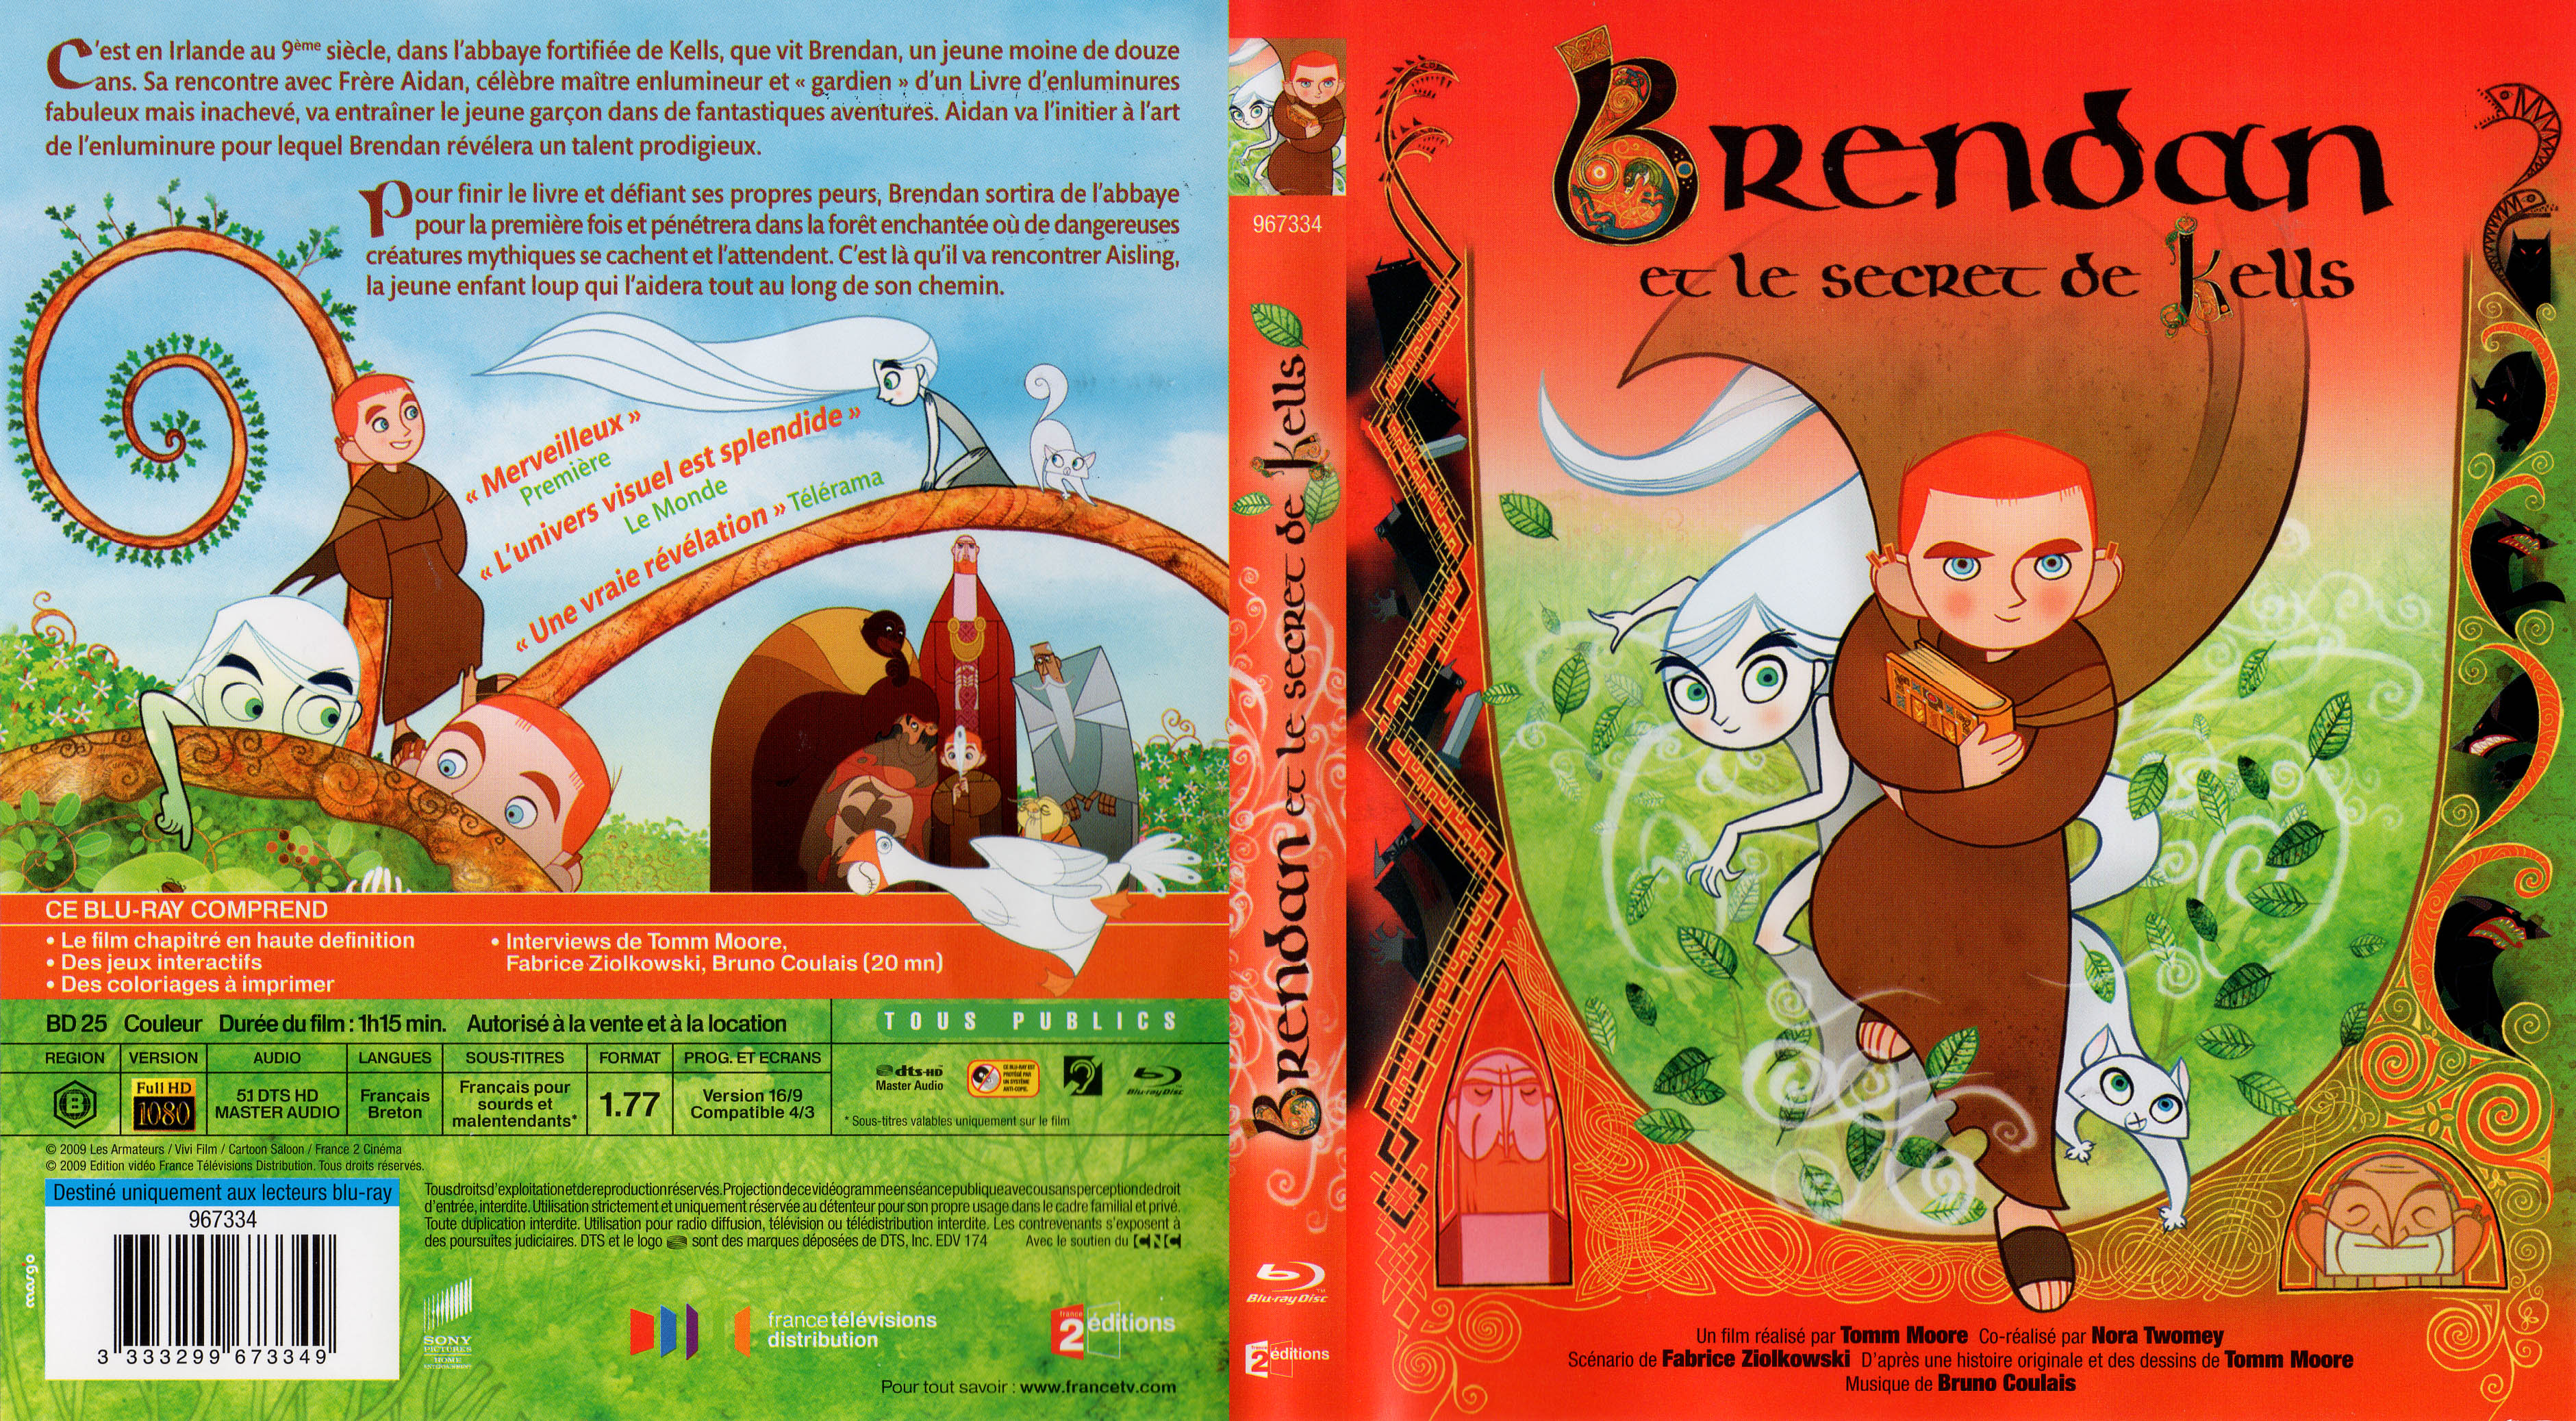 Jaquette DVD Brendan et le secret de Kells (BLU-RAY)